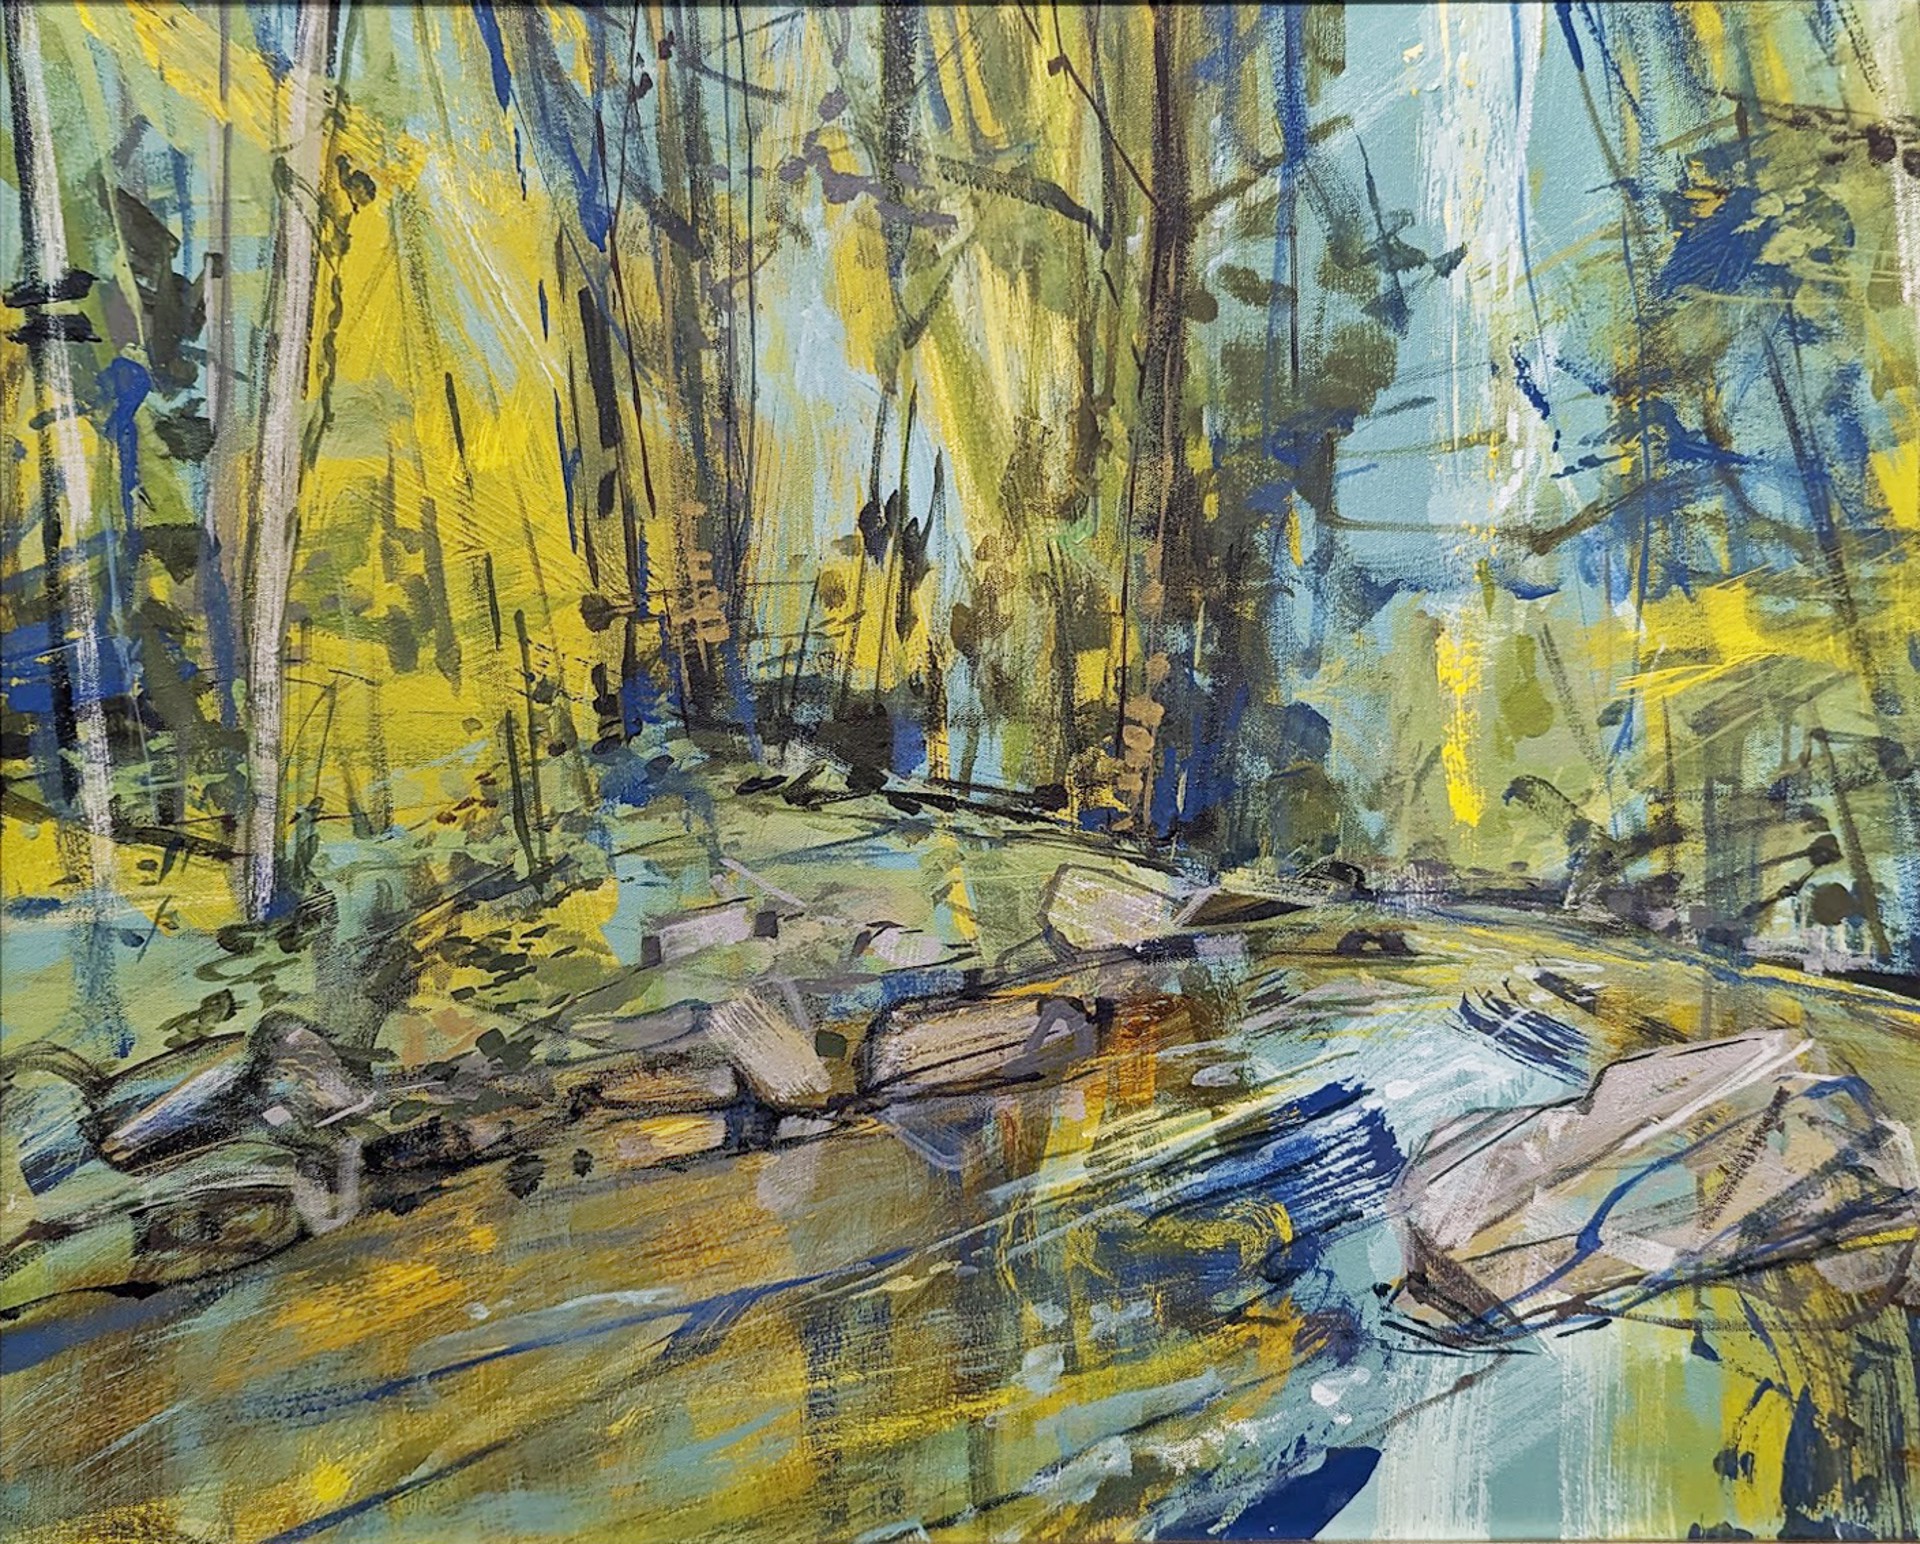 Ochre Flow on Mills River by Jeremy Russell